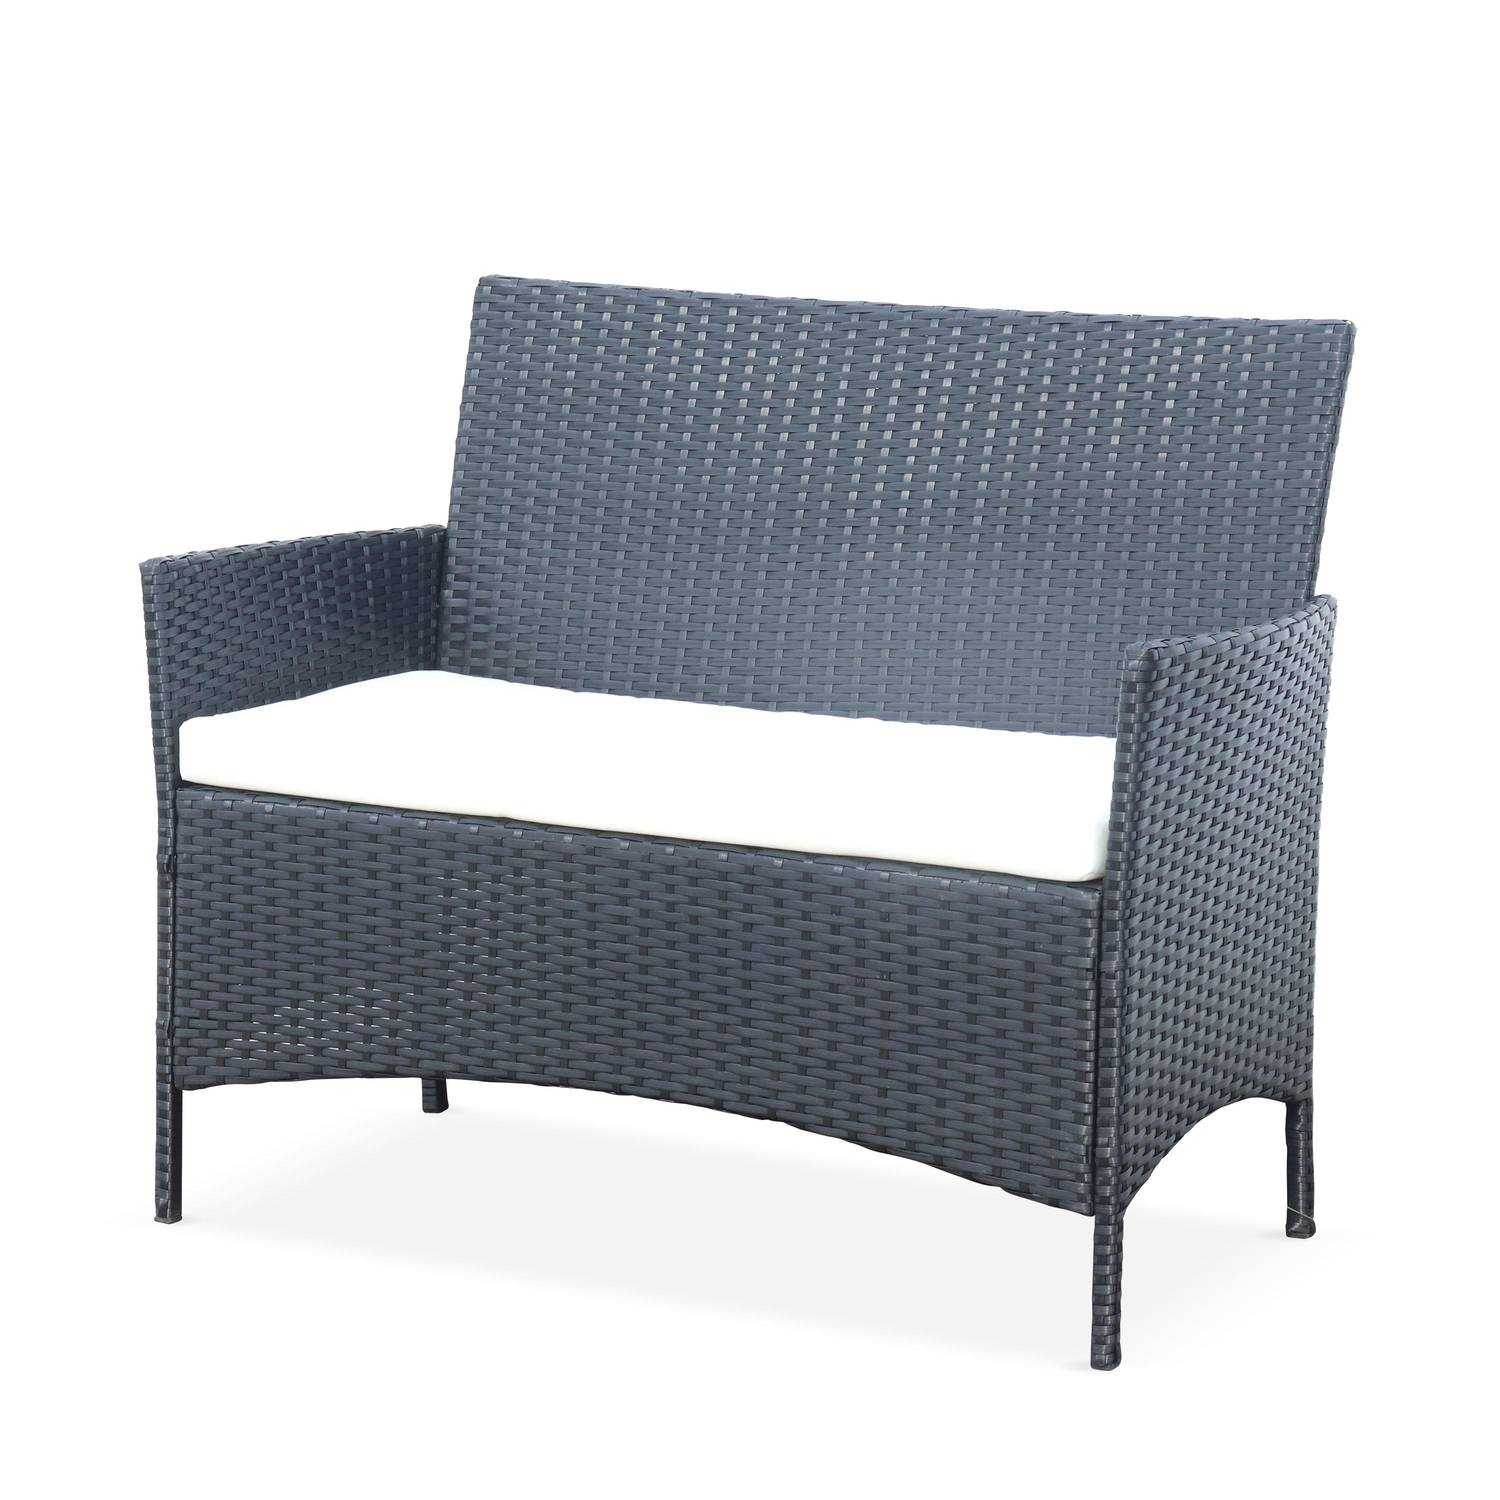 4-seater polyrattan garden sofa set - sofa, 2 armchairs, coffee table - Moltes - Black rattan, Off-white cushions Photo2